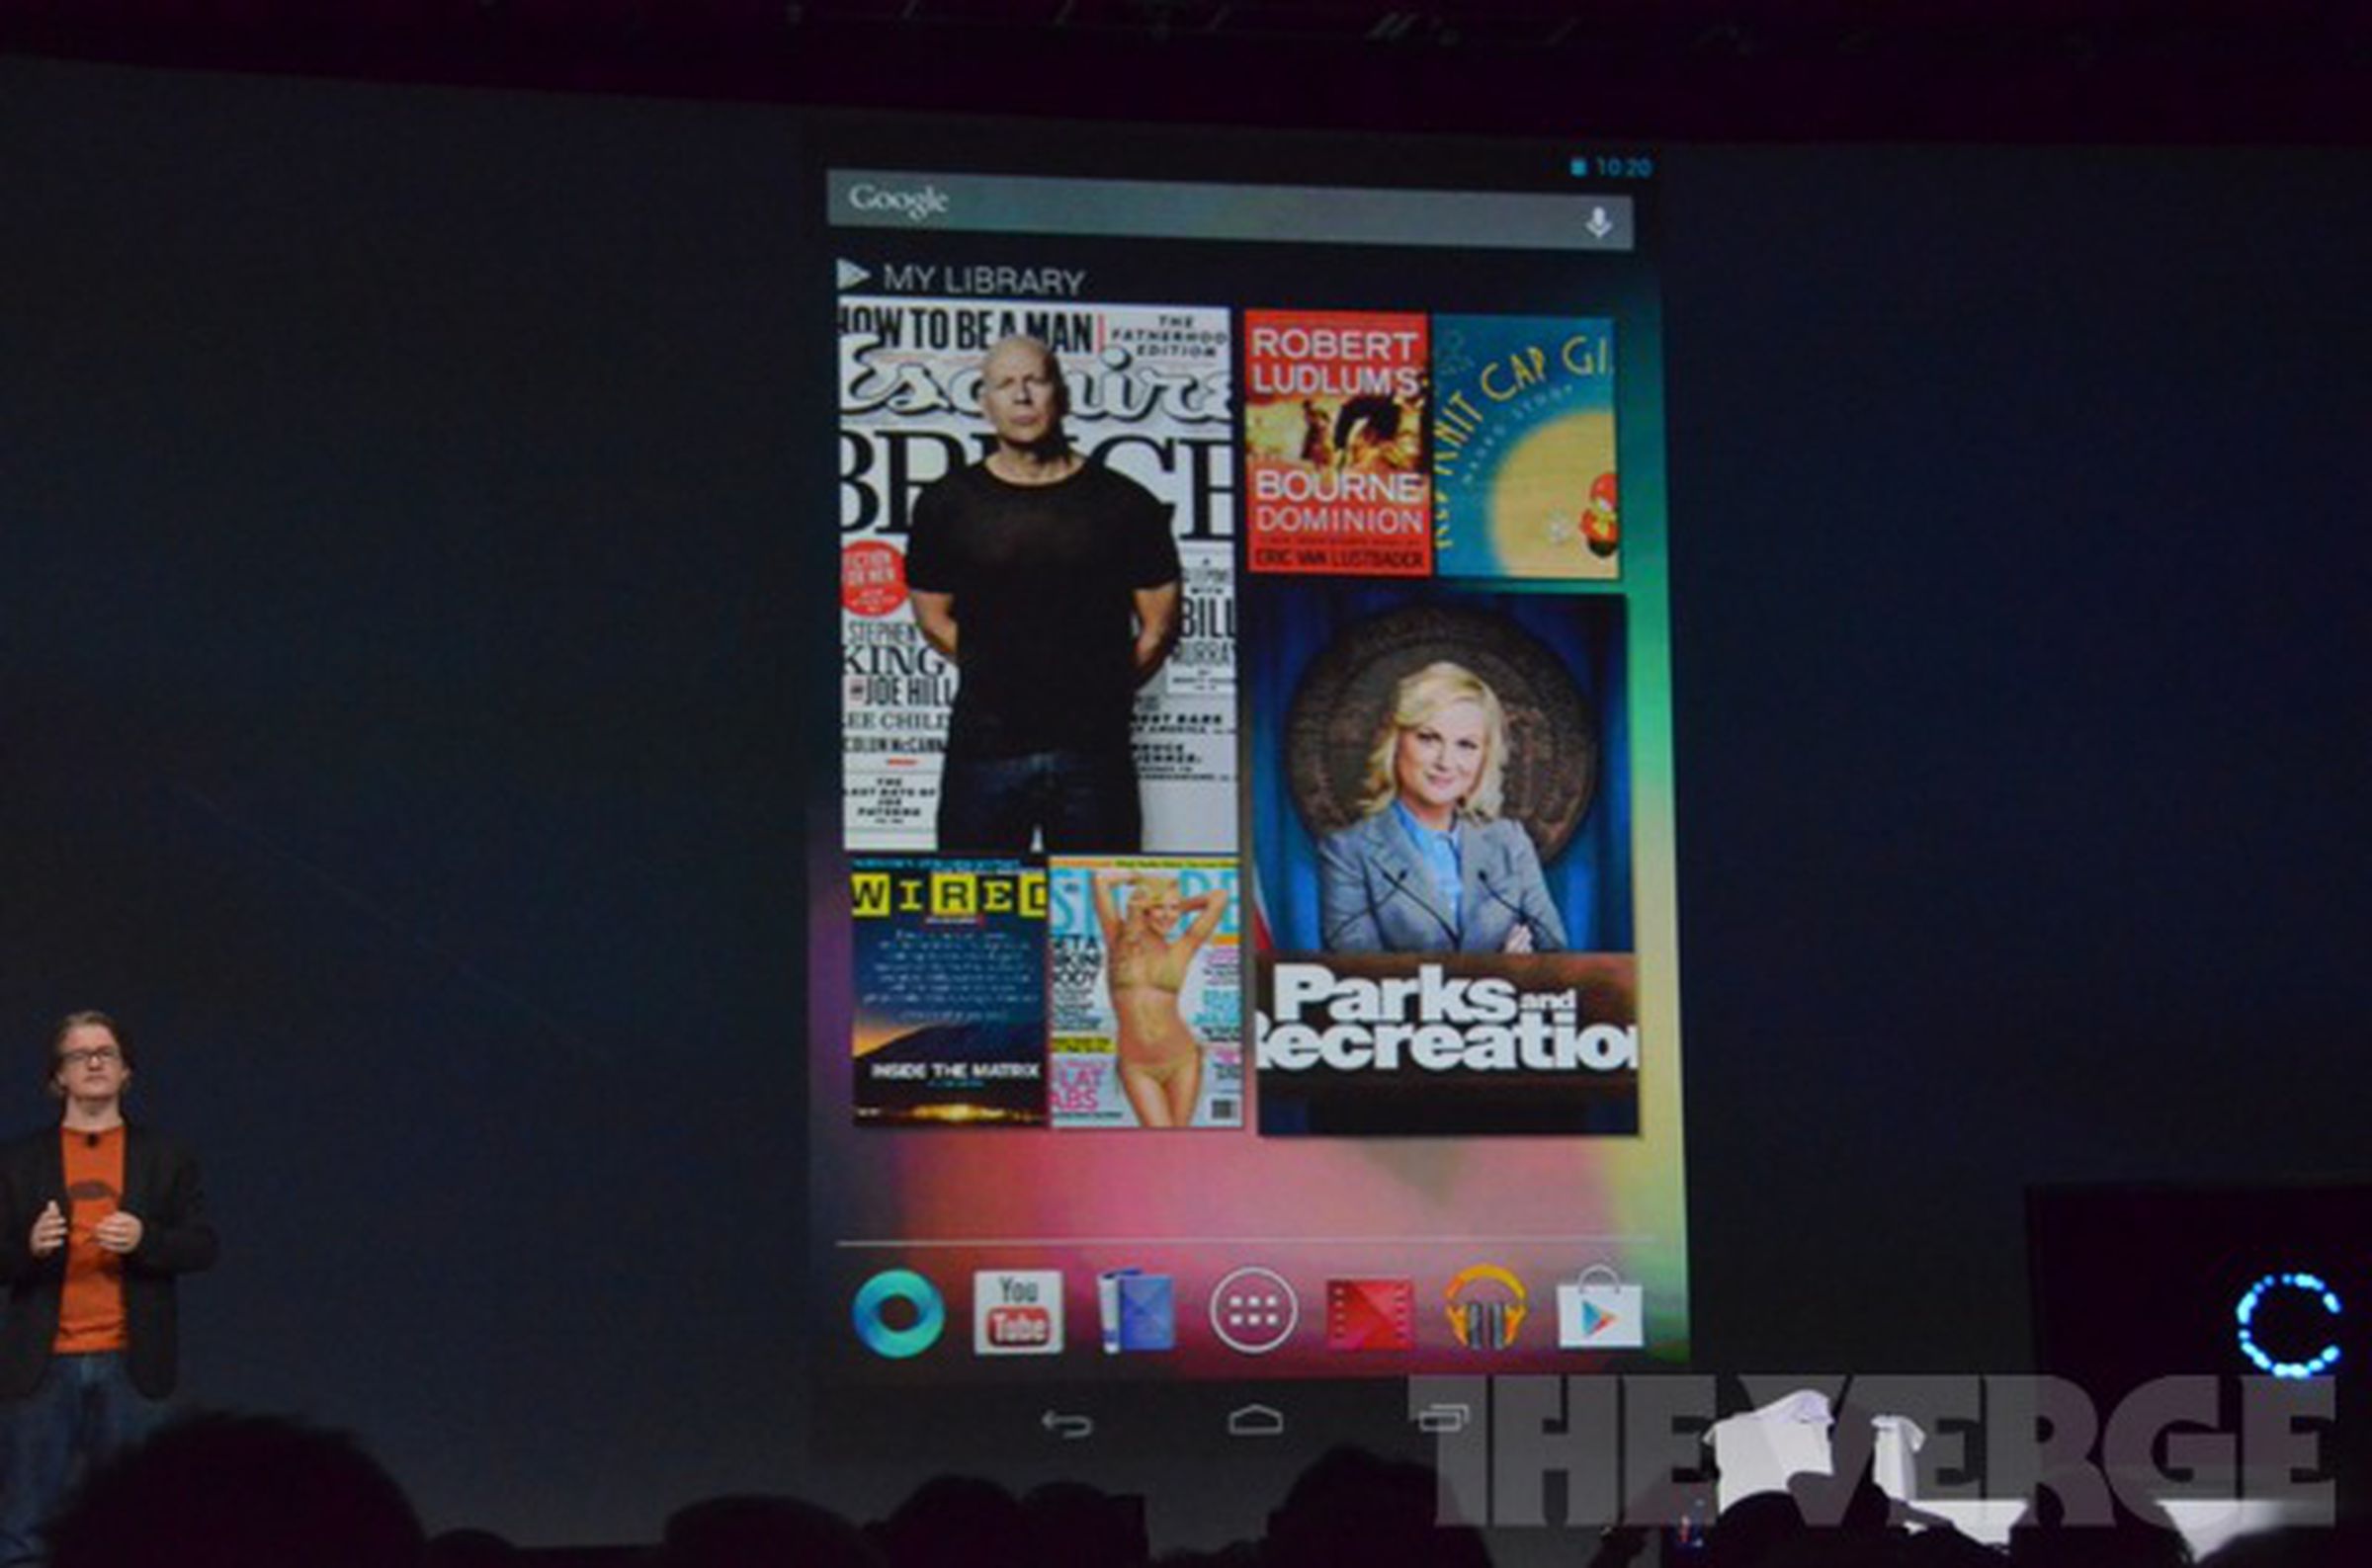 Nexus 7 photos from Google I/O 2012